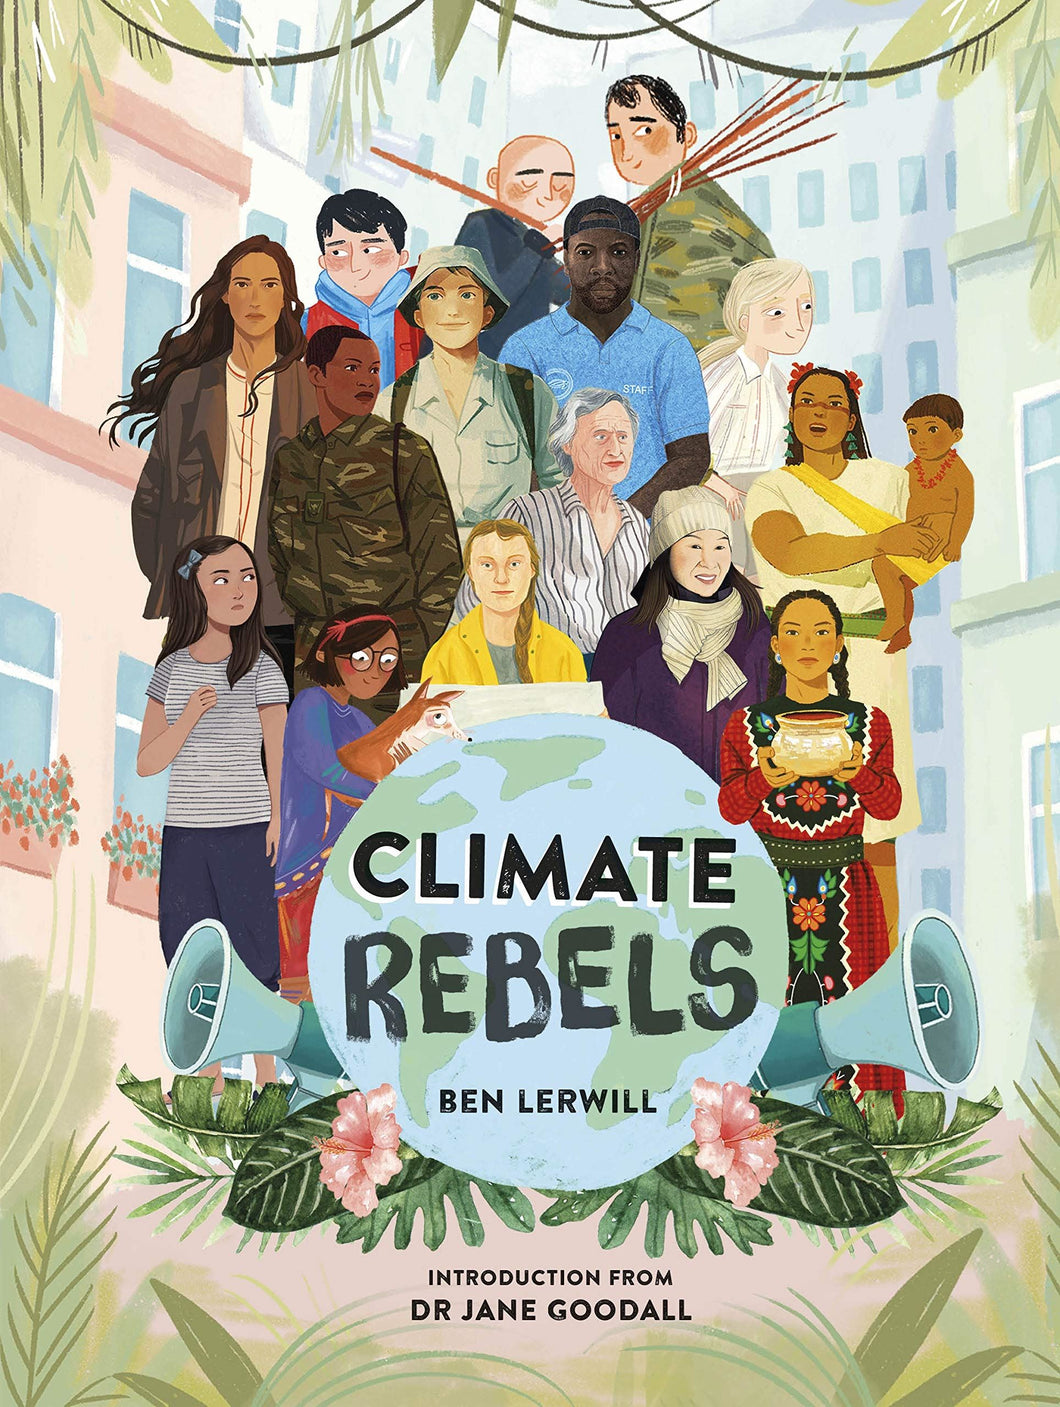 Climate rebels book